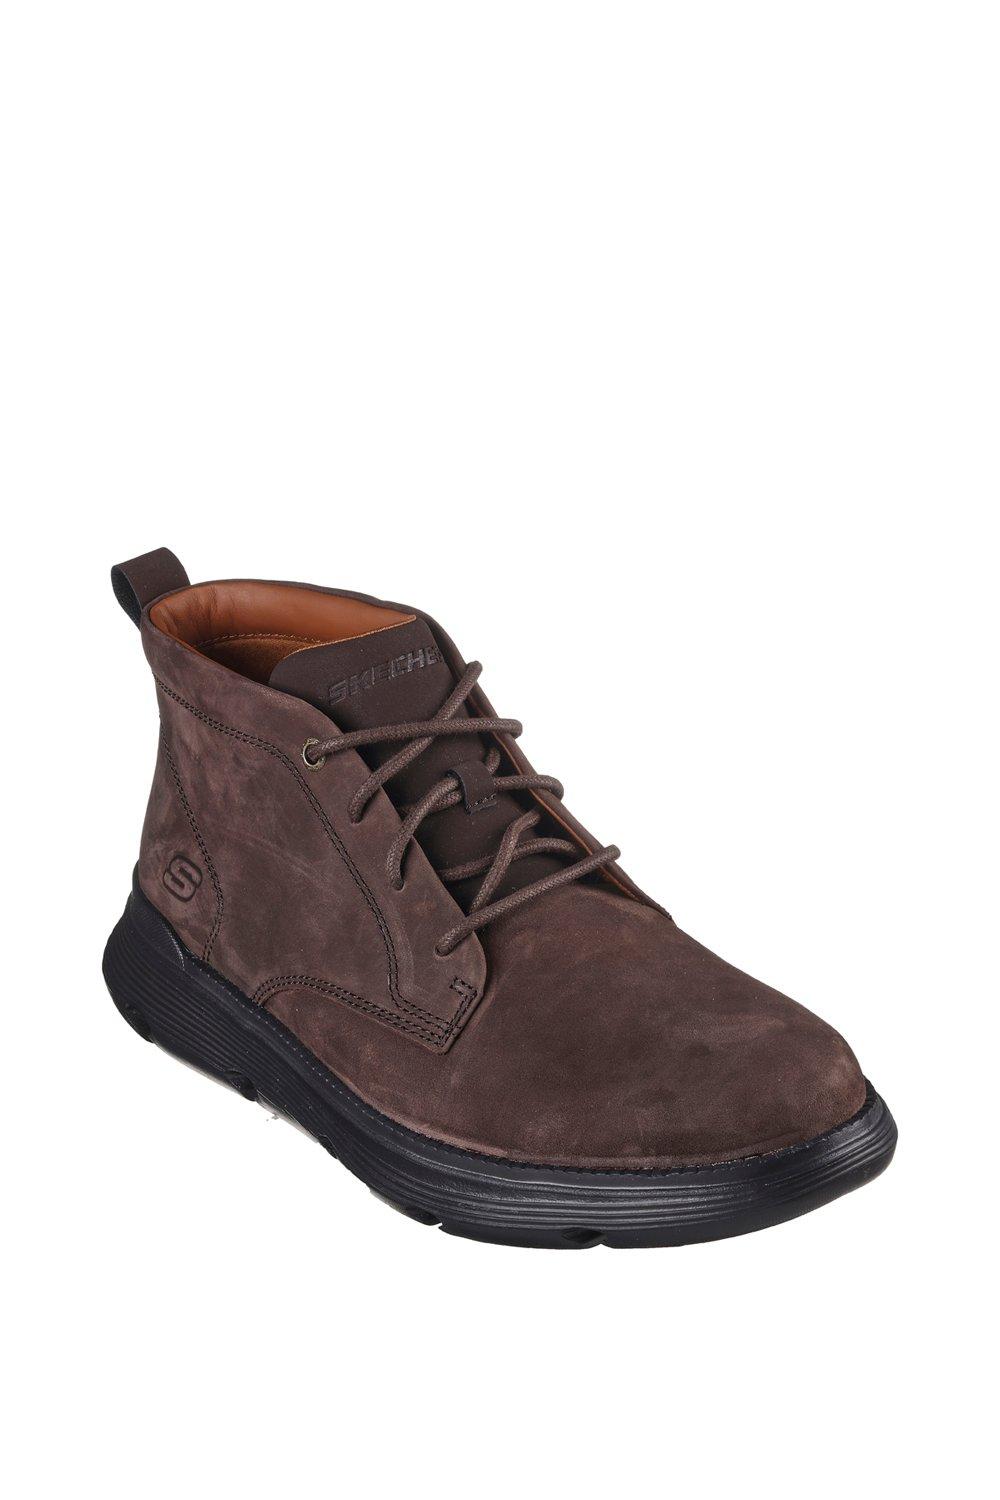 Boots | Garza Fontaine Leather Chukka Boot | Skechers